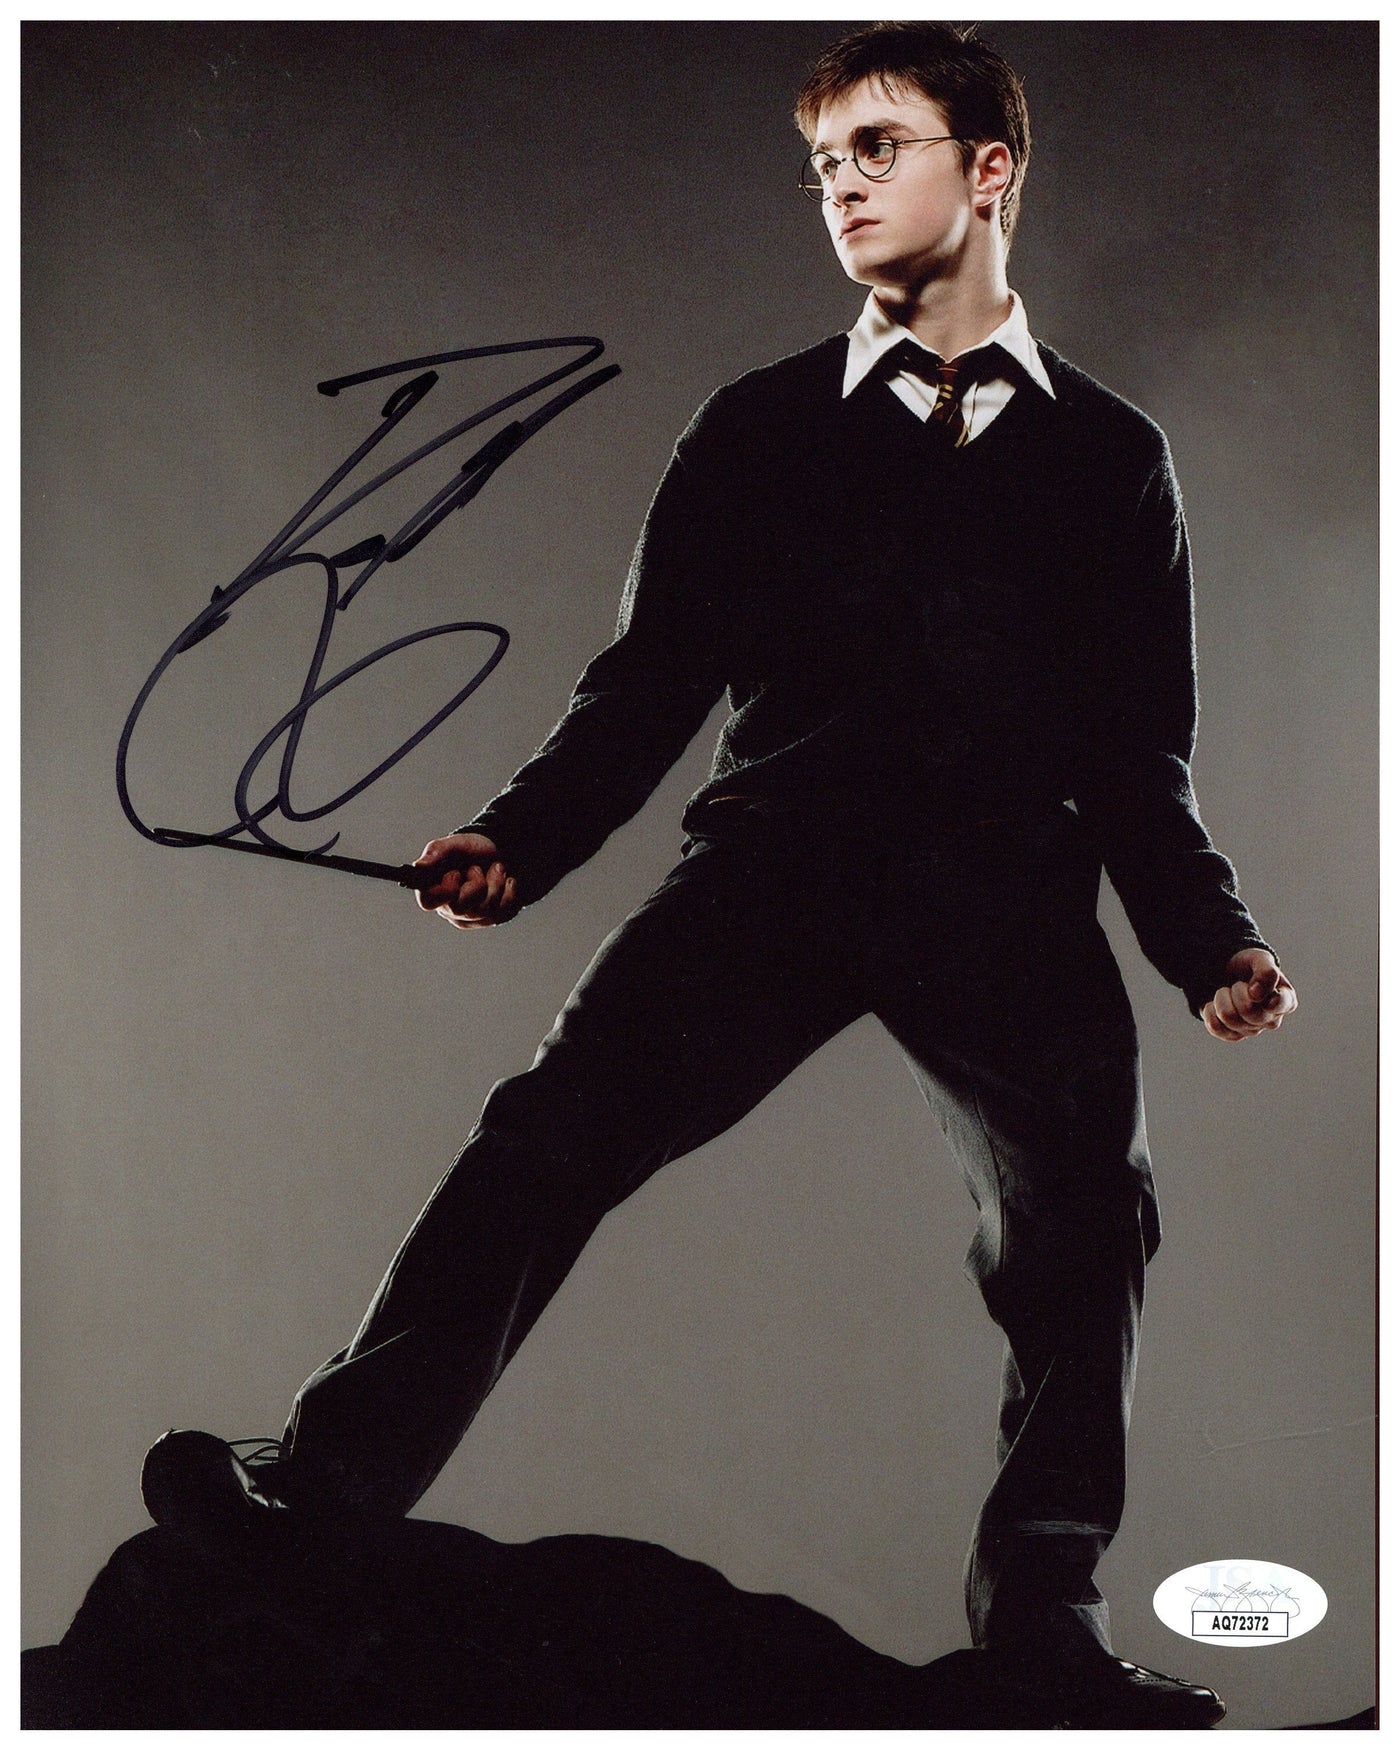 Daniel Radcliffe Signed 8x10 Photo Harry Potter Autographed JSA COA #6